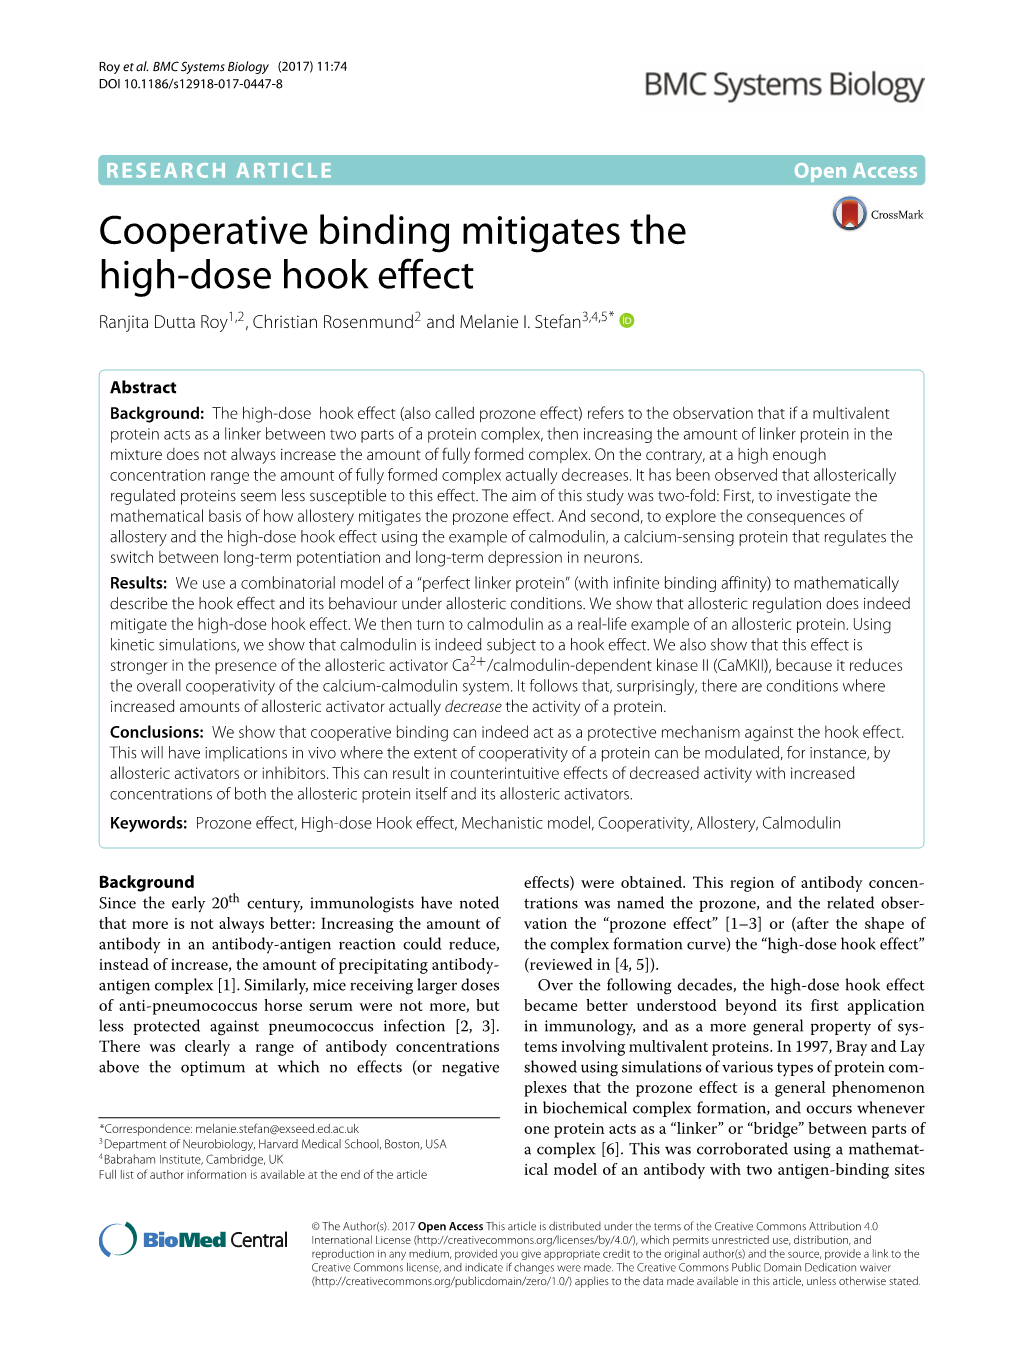 Cooperative Binding Mitigates the High-Dose Hook Effect Ranjita Dutta Roy1,2, Christian Rosenmund2 and Melanie I